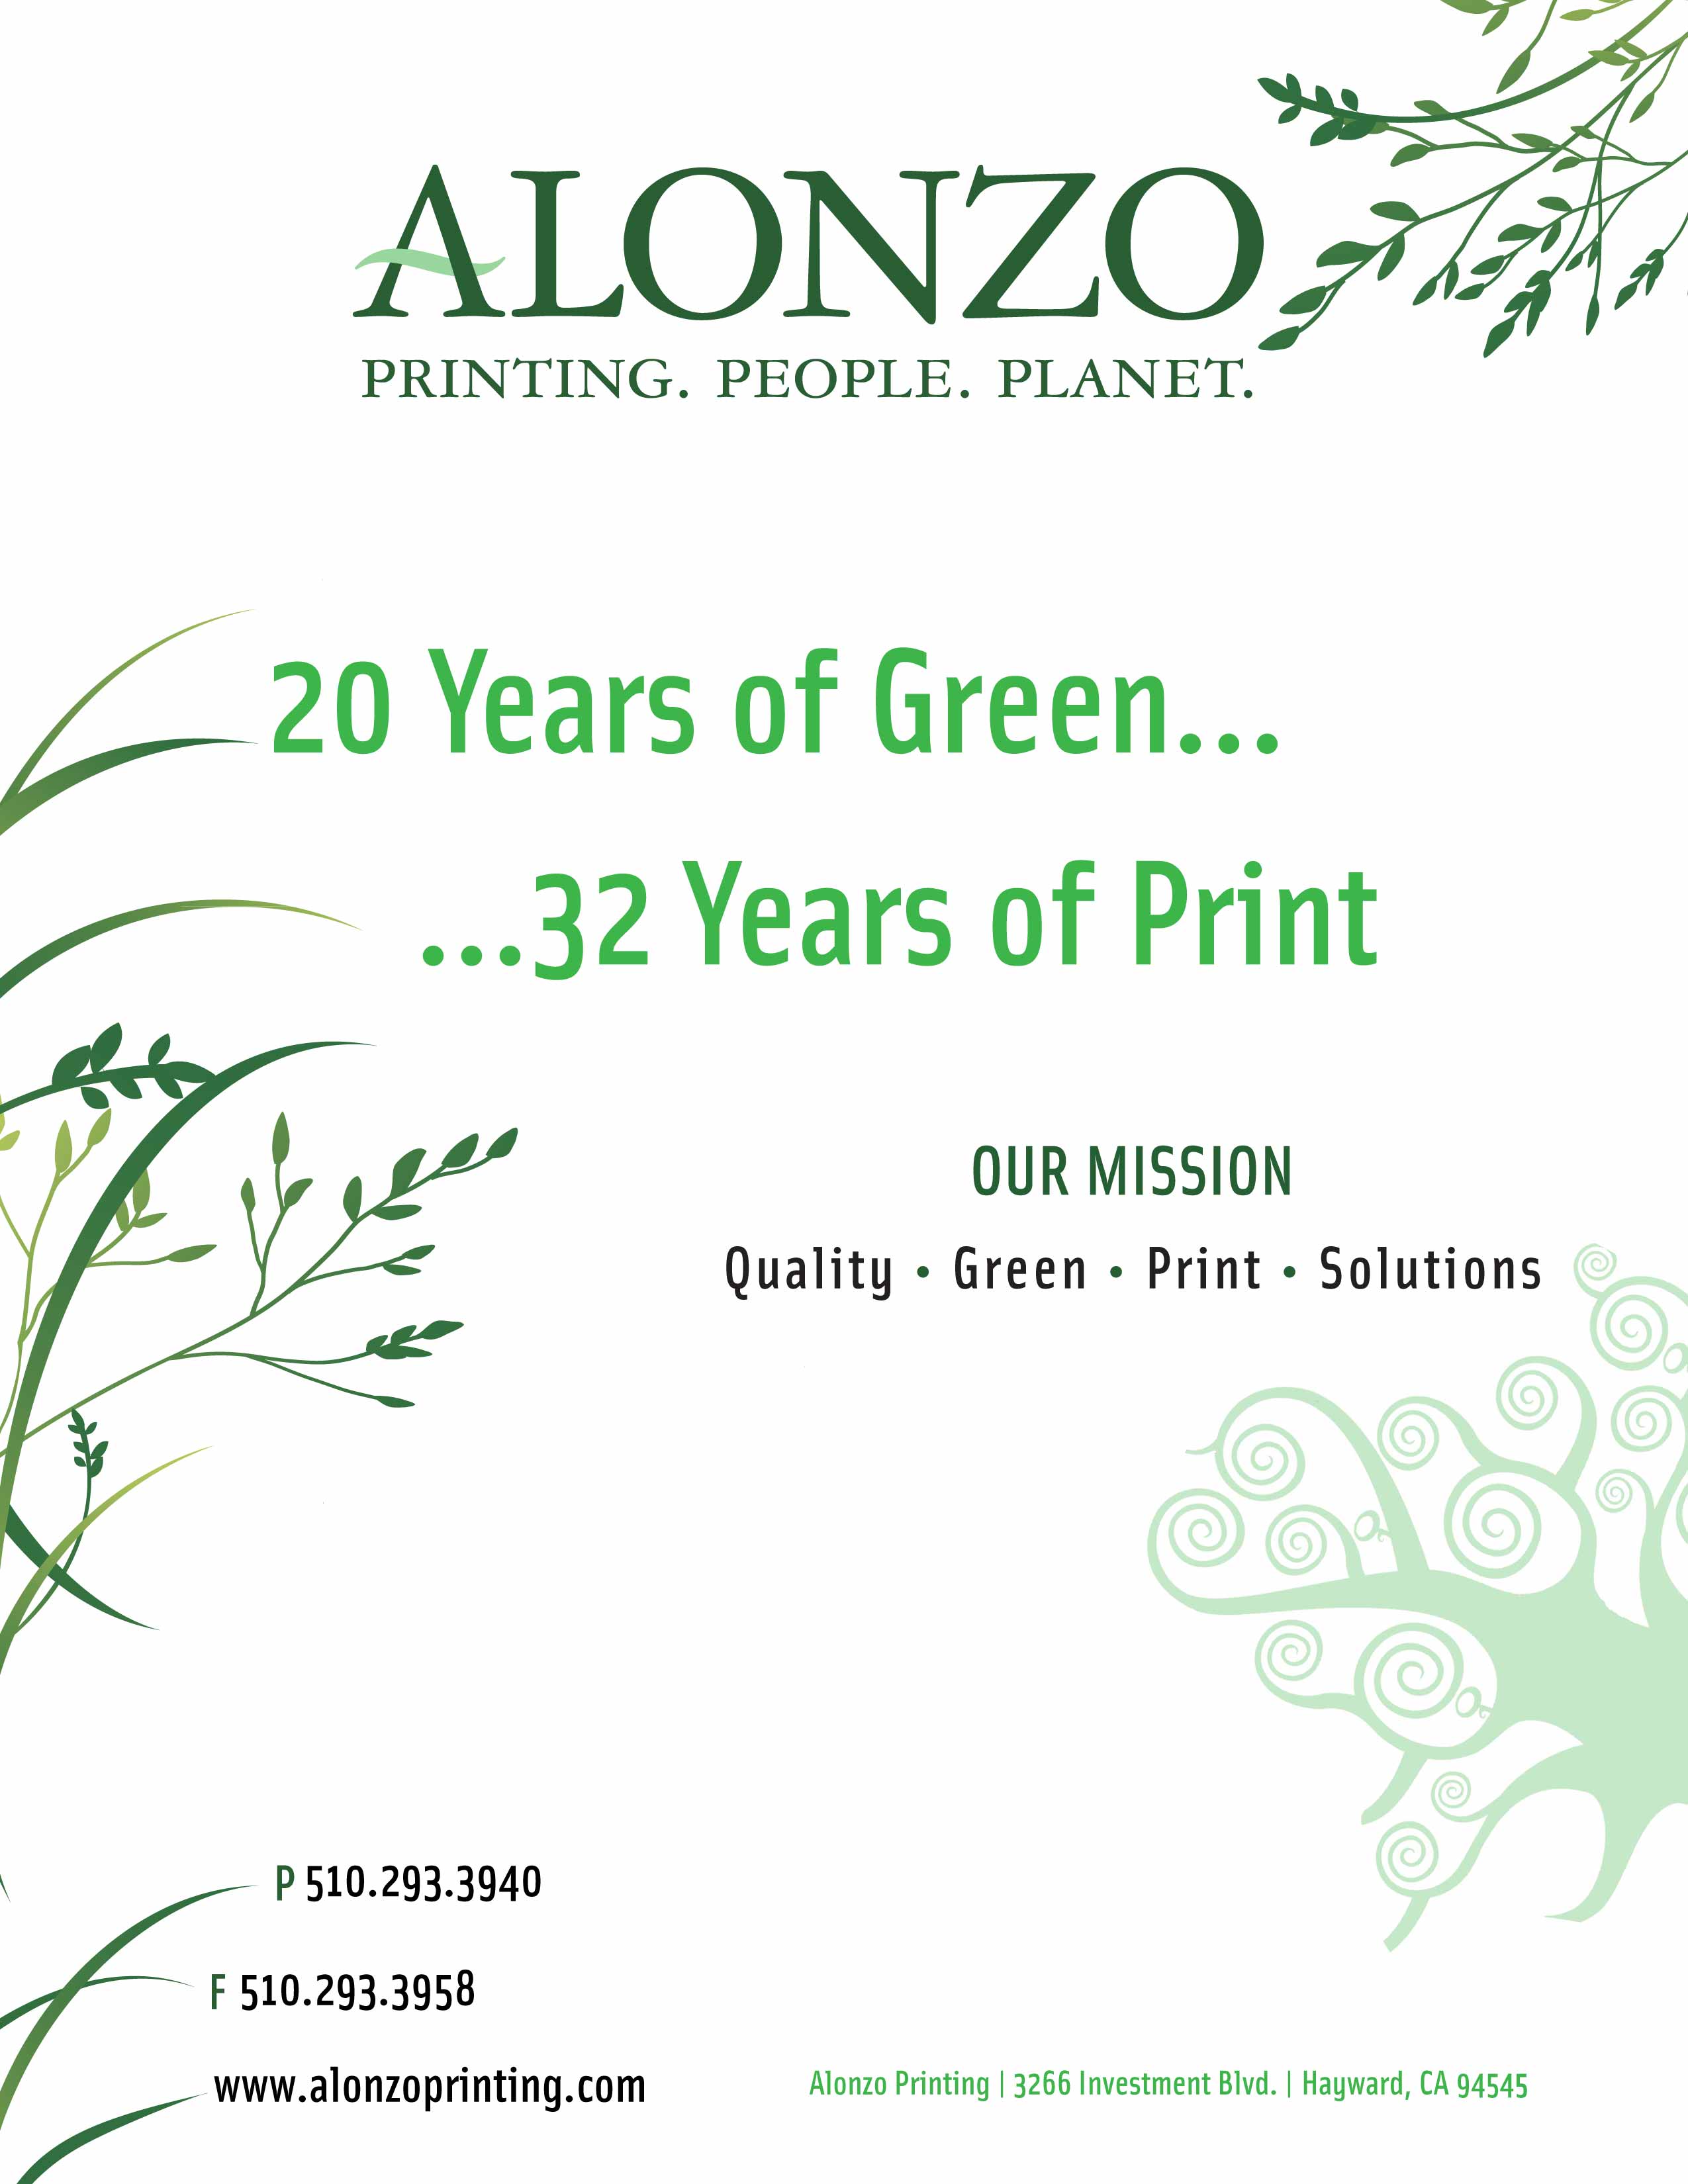 print-advertising-richmond-alonzo